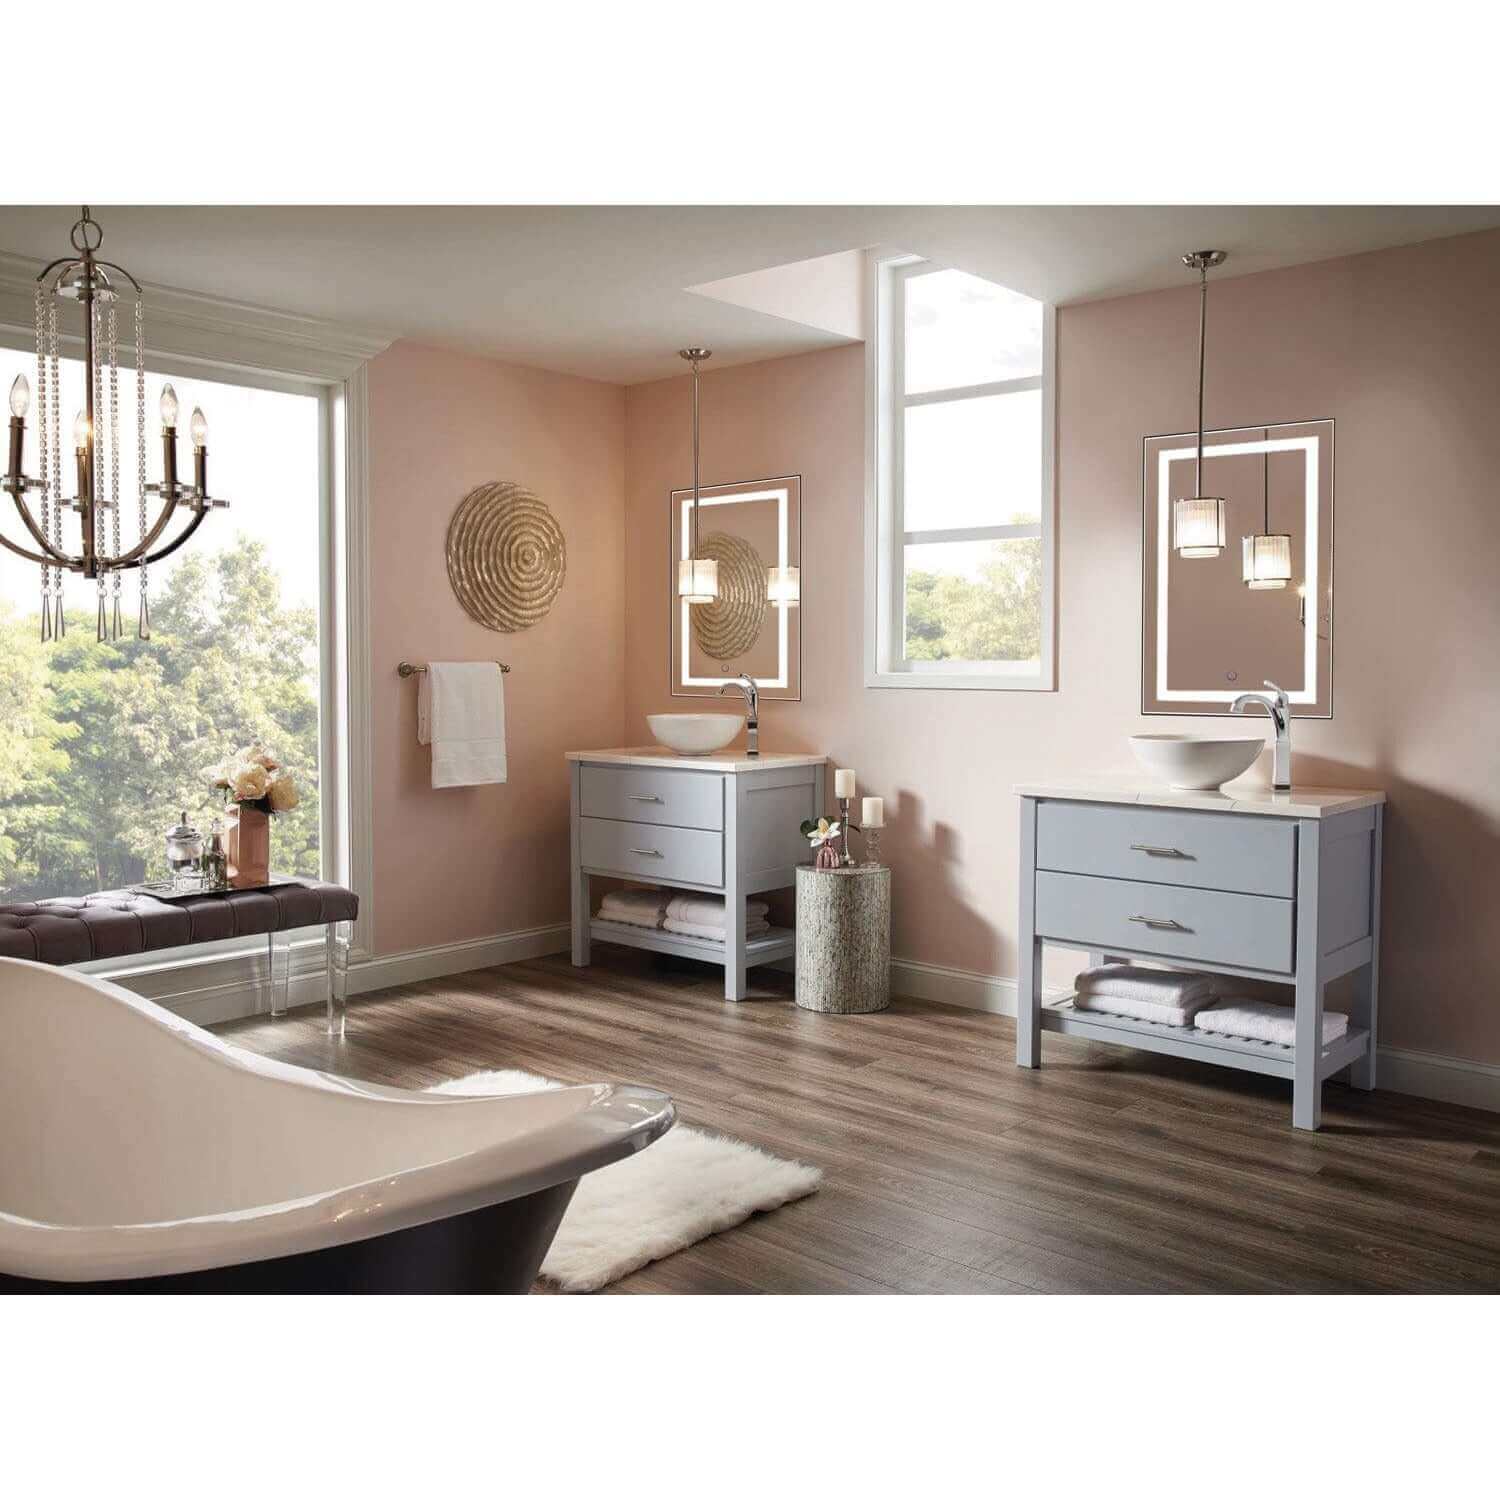 Two Krugg Icon 2436 Bathroom Mirrors w/ lights above dual vanities in an elegant bathroom